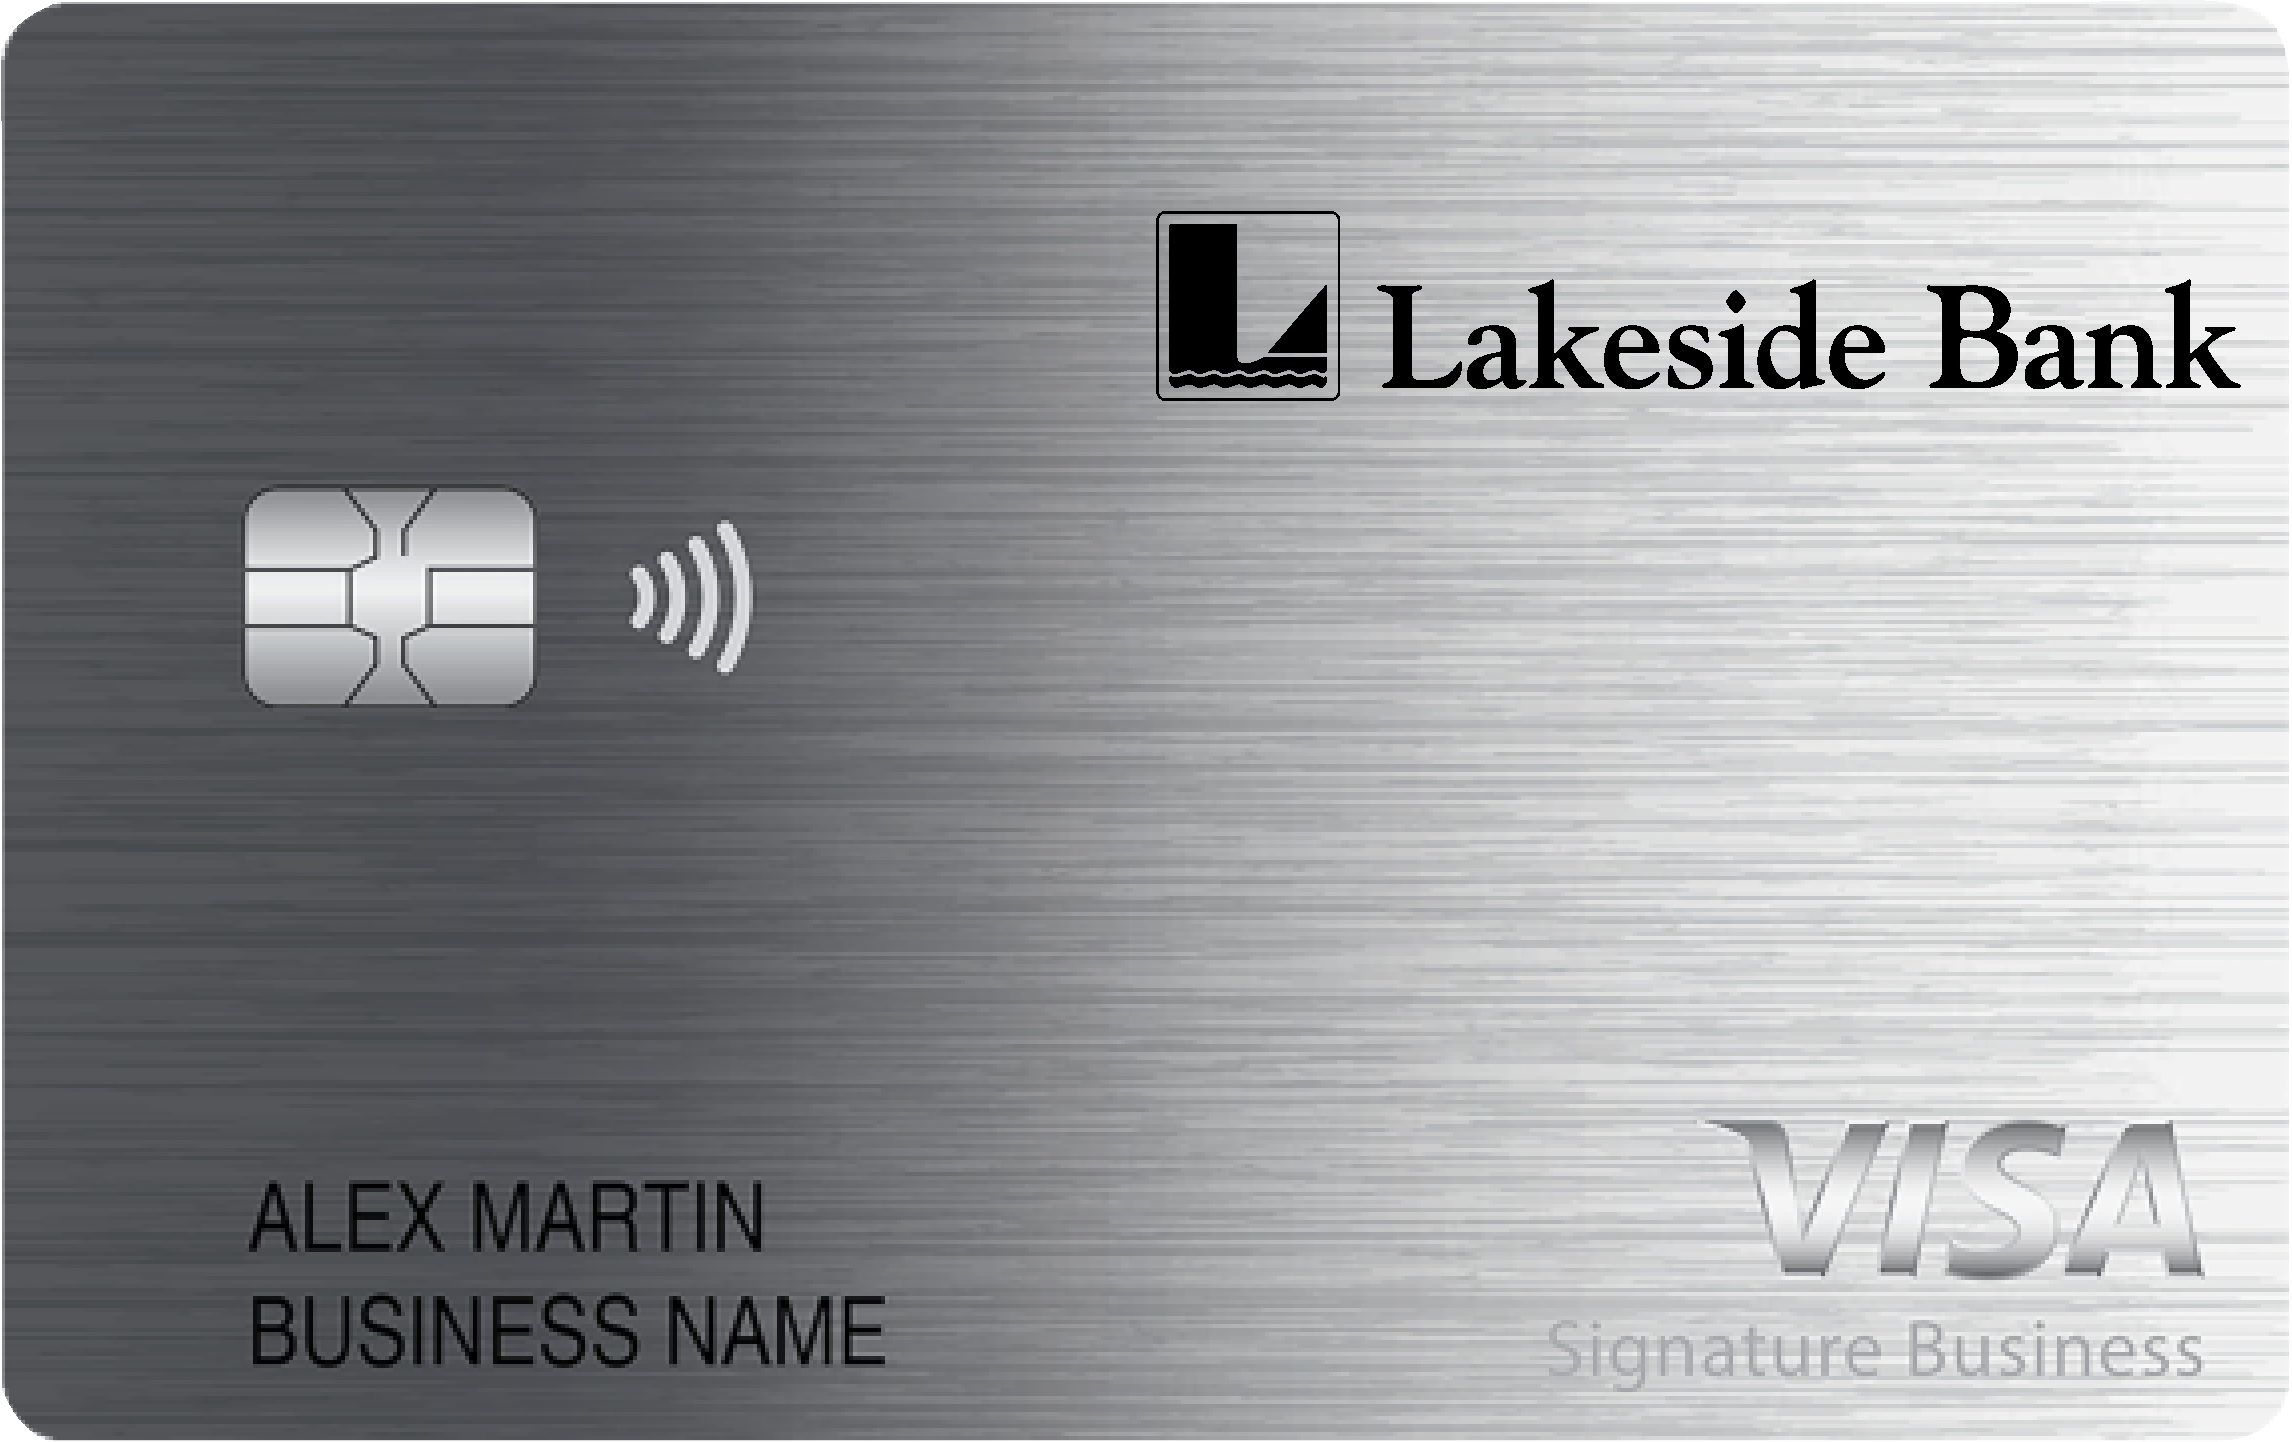 Lakeside Bank Smart Business Rewards Card